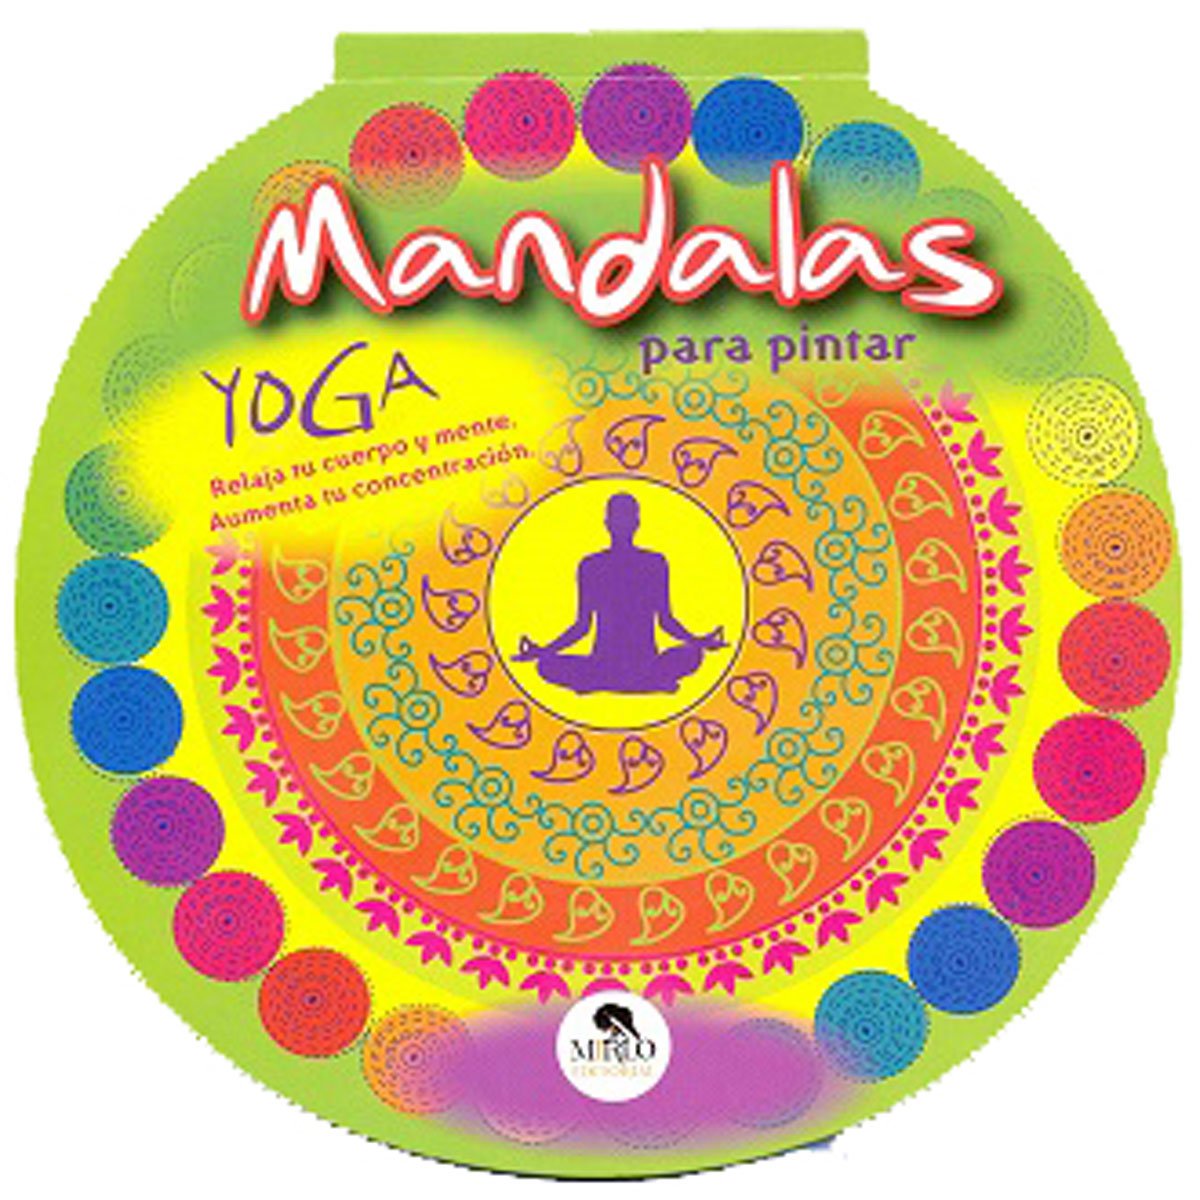 Mandalas Yoga Redondo Emur